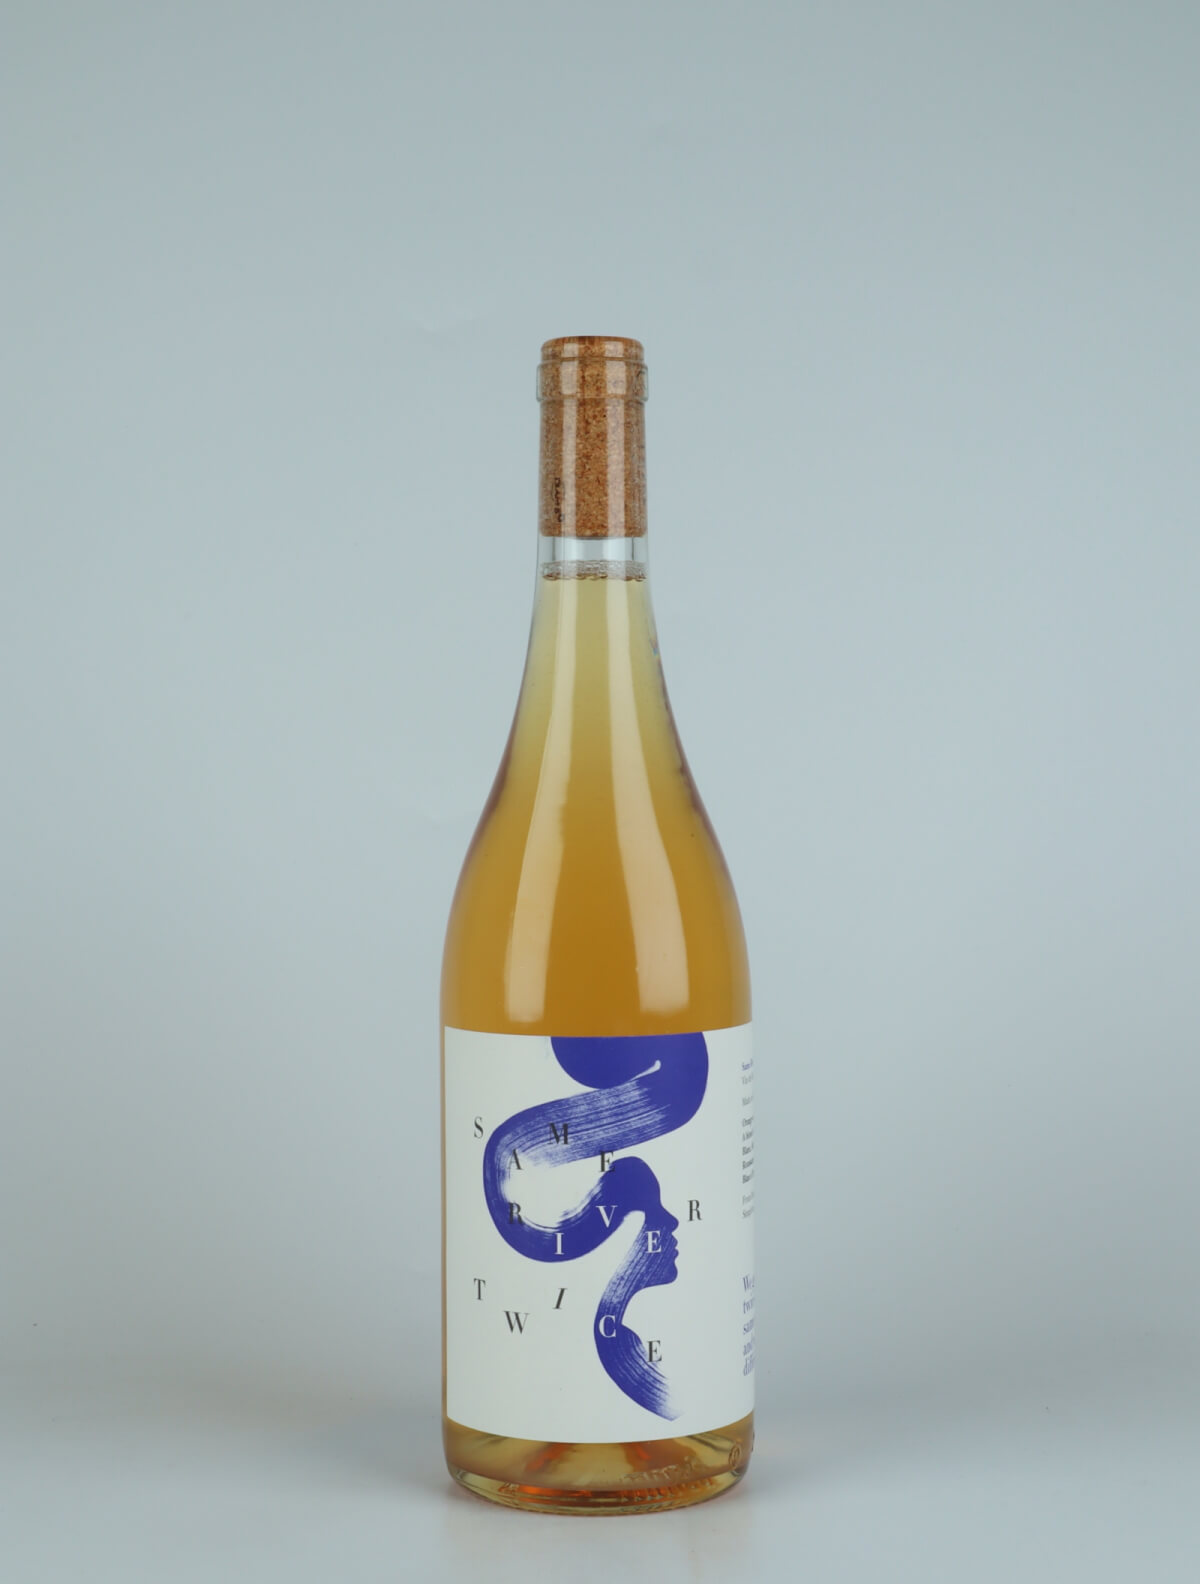 A bottle 2022 Same River Twice Orange Orange wine from Heliocentric Wines, Rhône in France